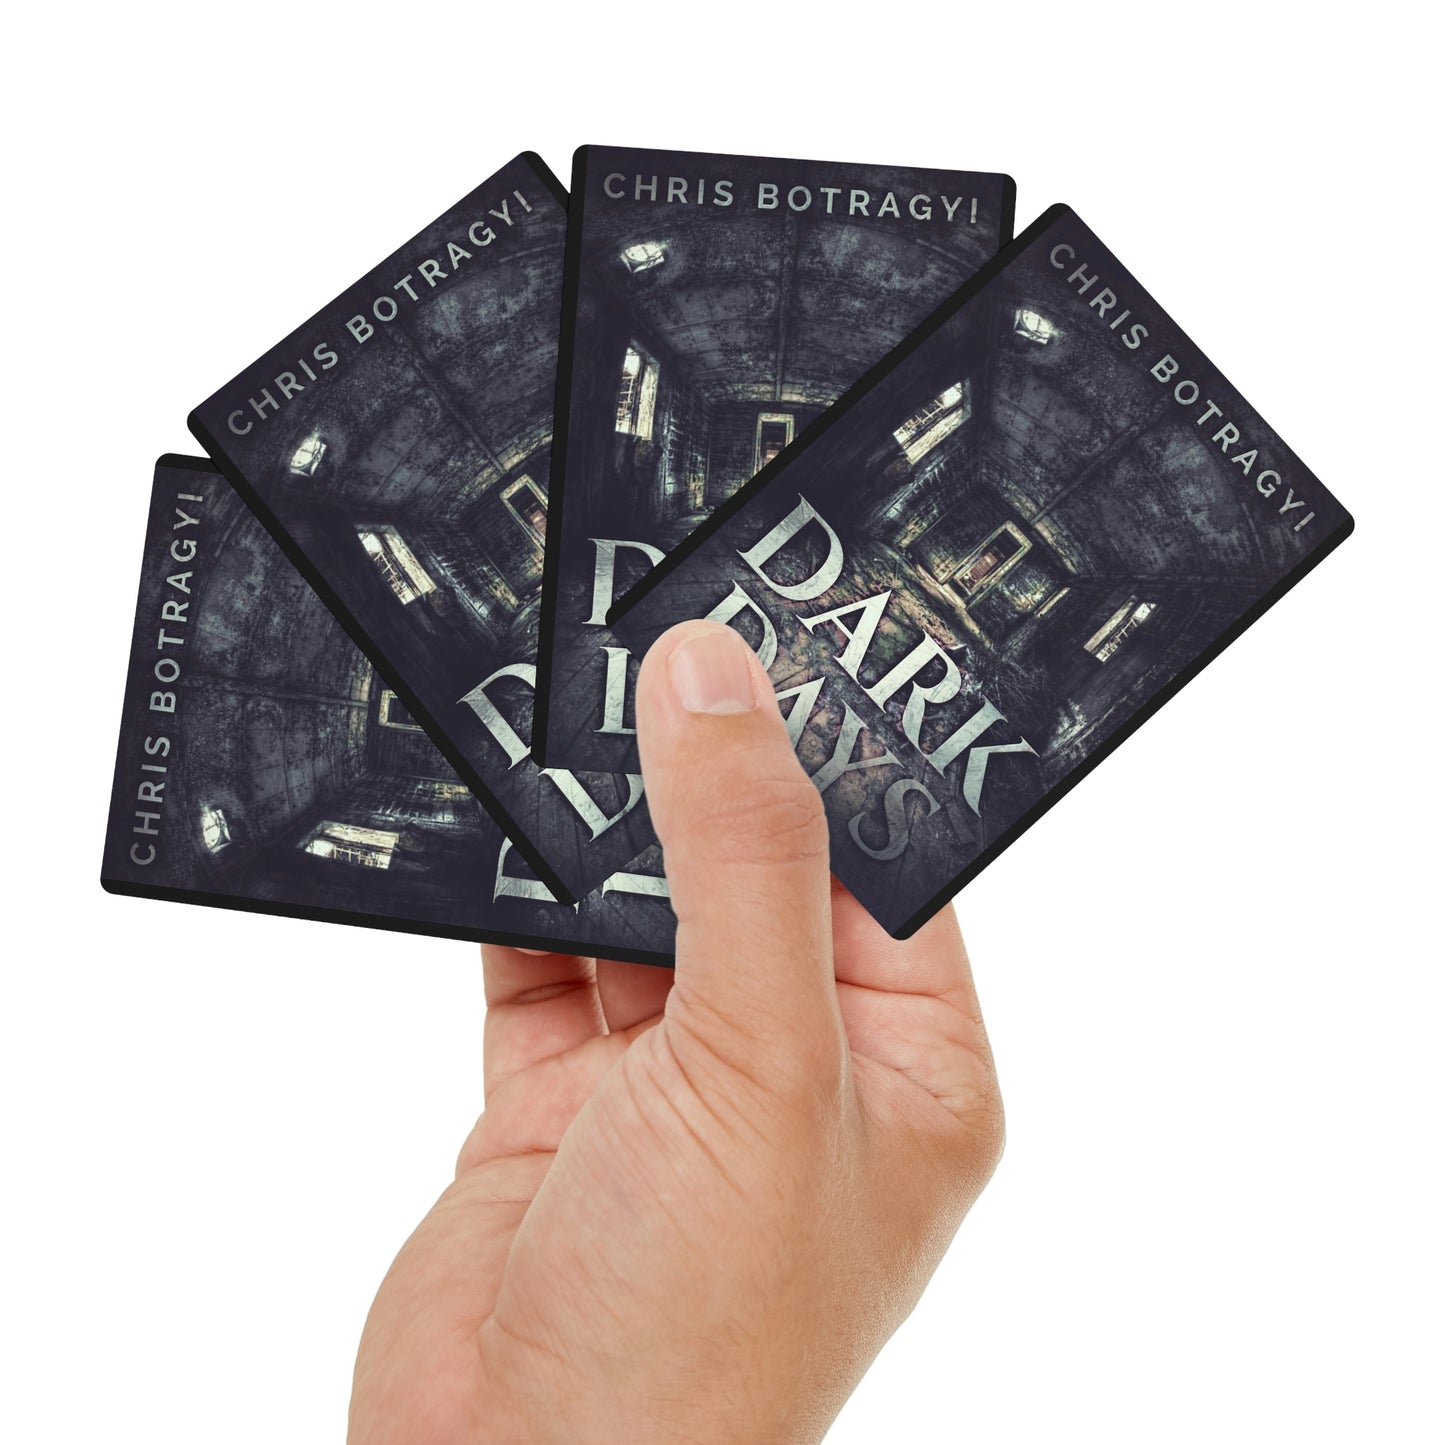 Dark Days - Playing Cards